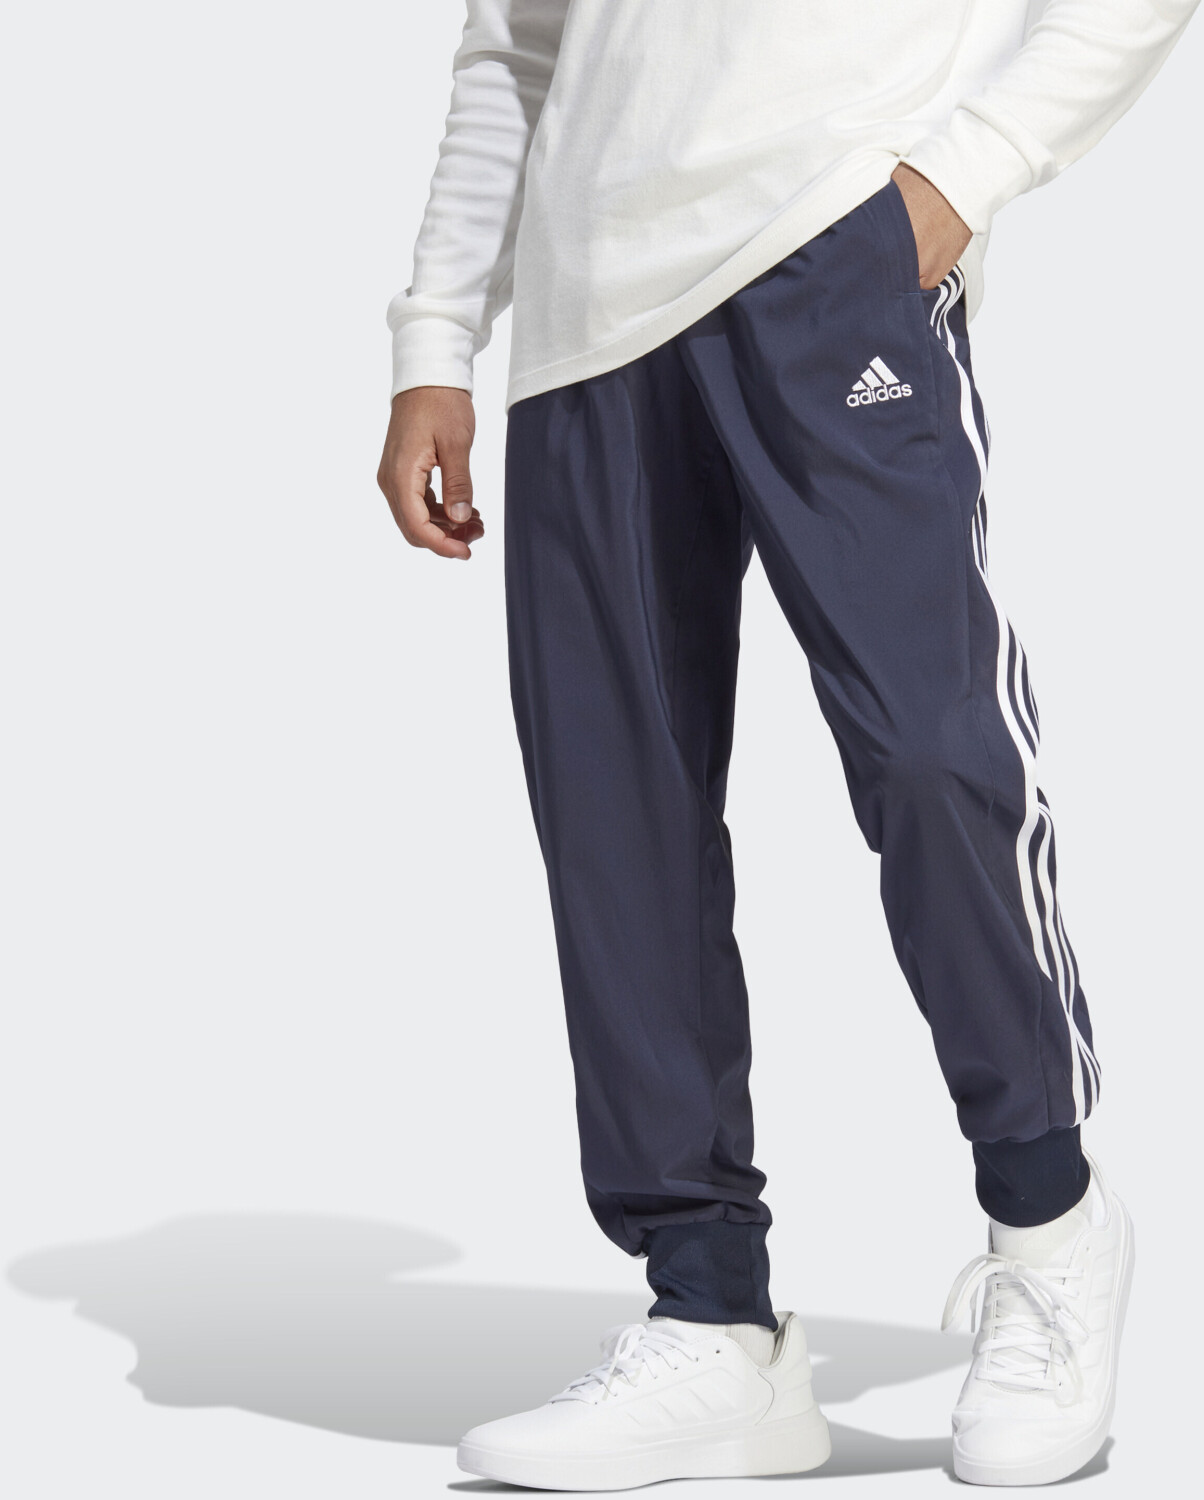 Adidas Tapered 3-Stripes Woven € 34,75 ab Pants bei Cuff Preisvergleich legend Ink/white | (IC0042) AEROREADY Essentials Man